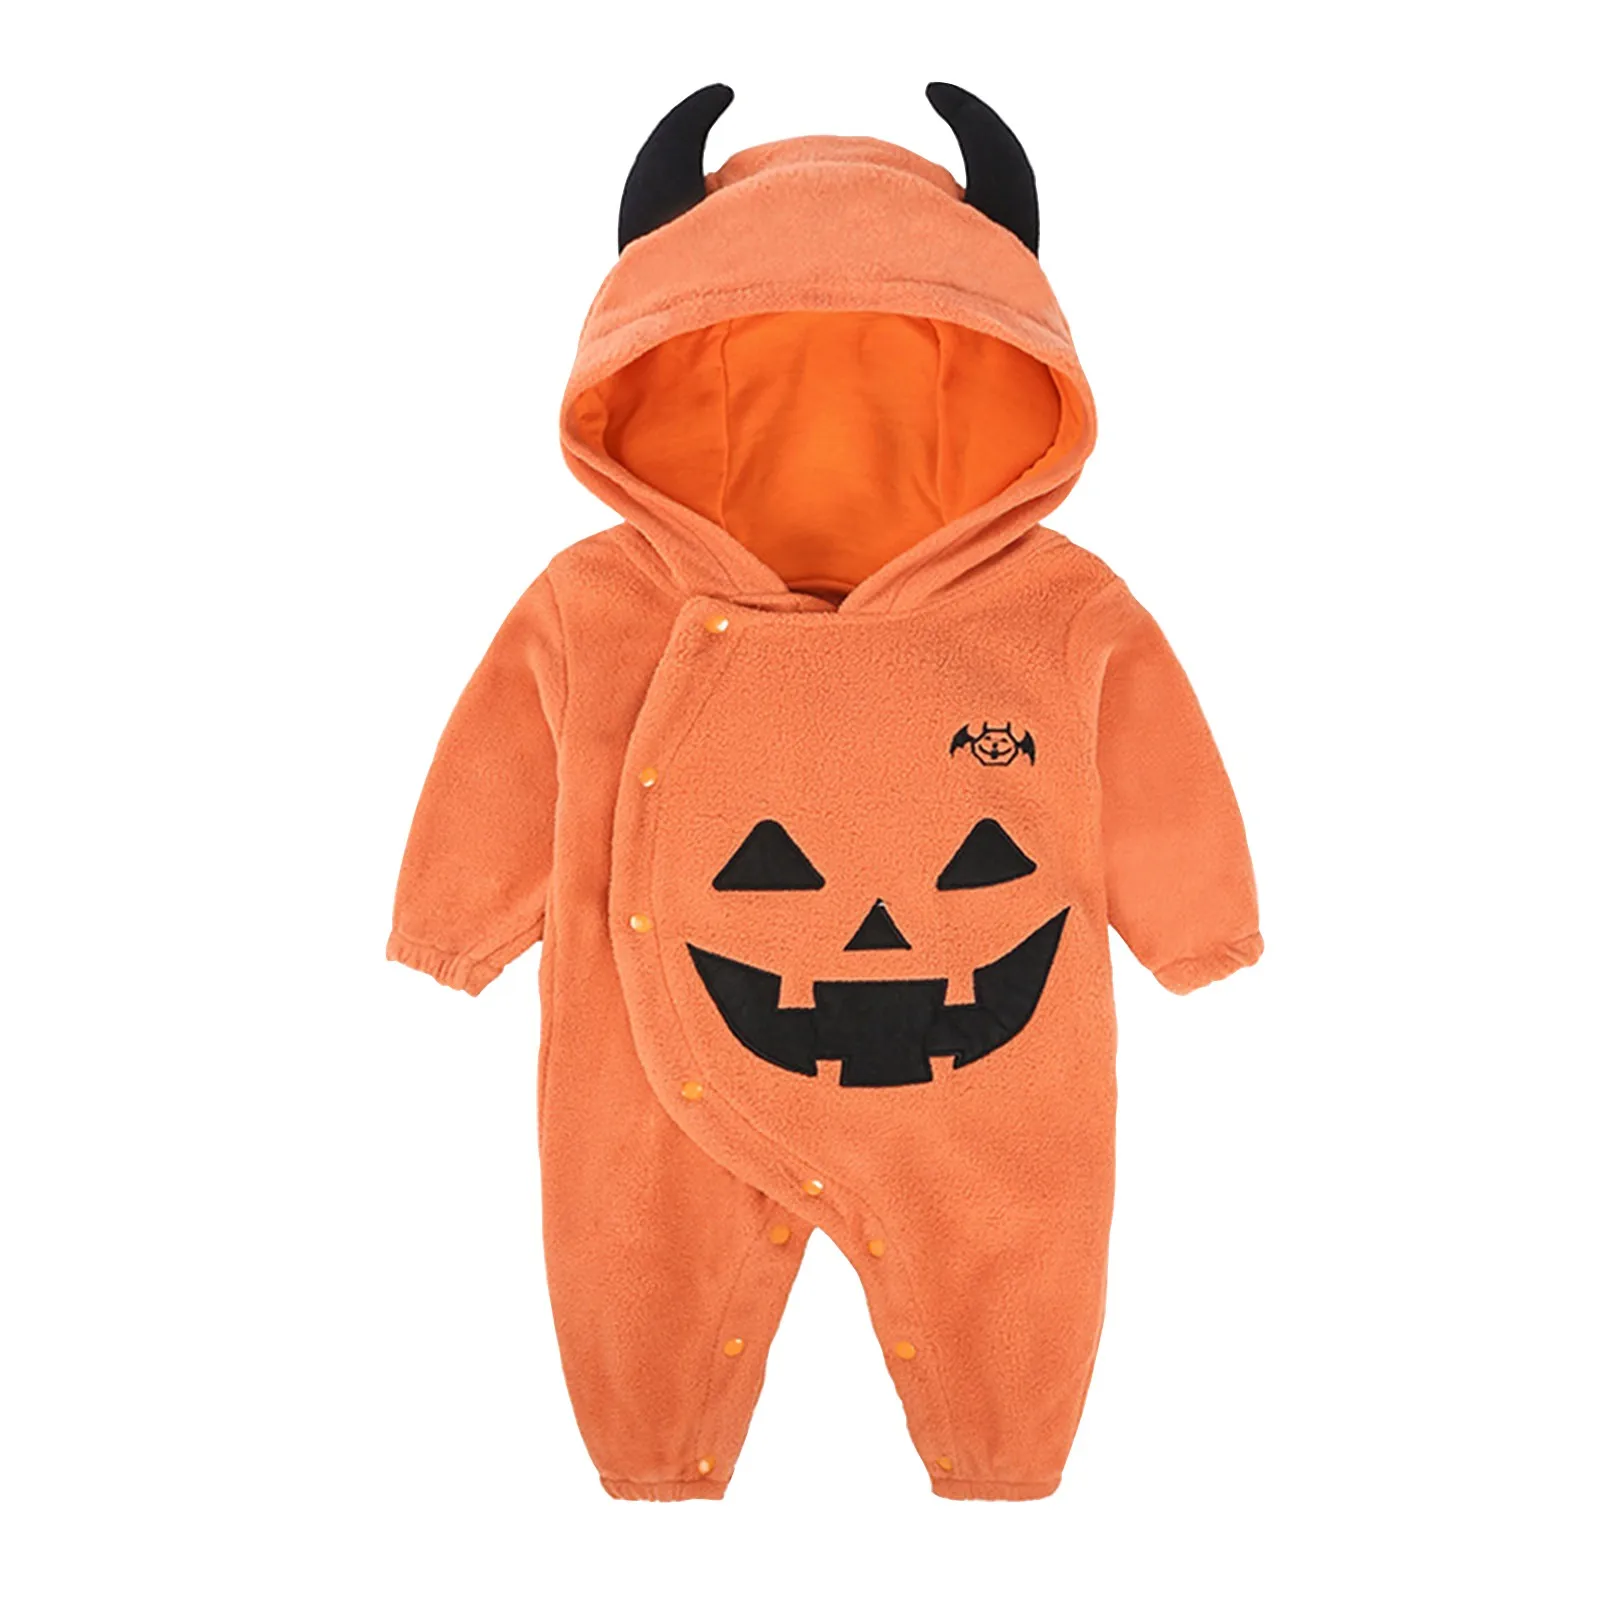 Fleece Baby Jumpsuit Hooded Baby Halloween Costume Toddler Clothes Orange Cosplay Infant Rompers Kids Onesie